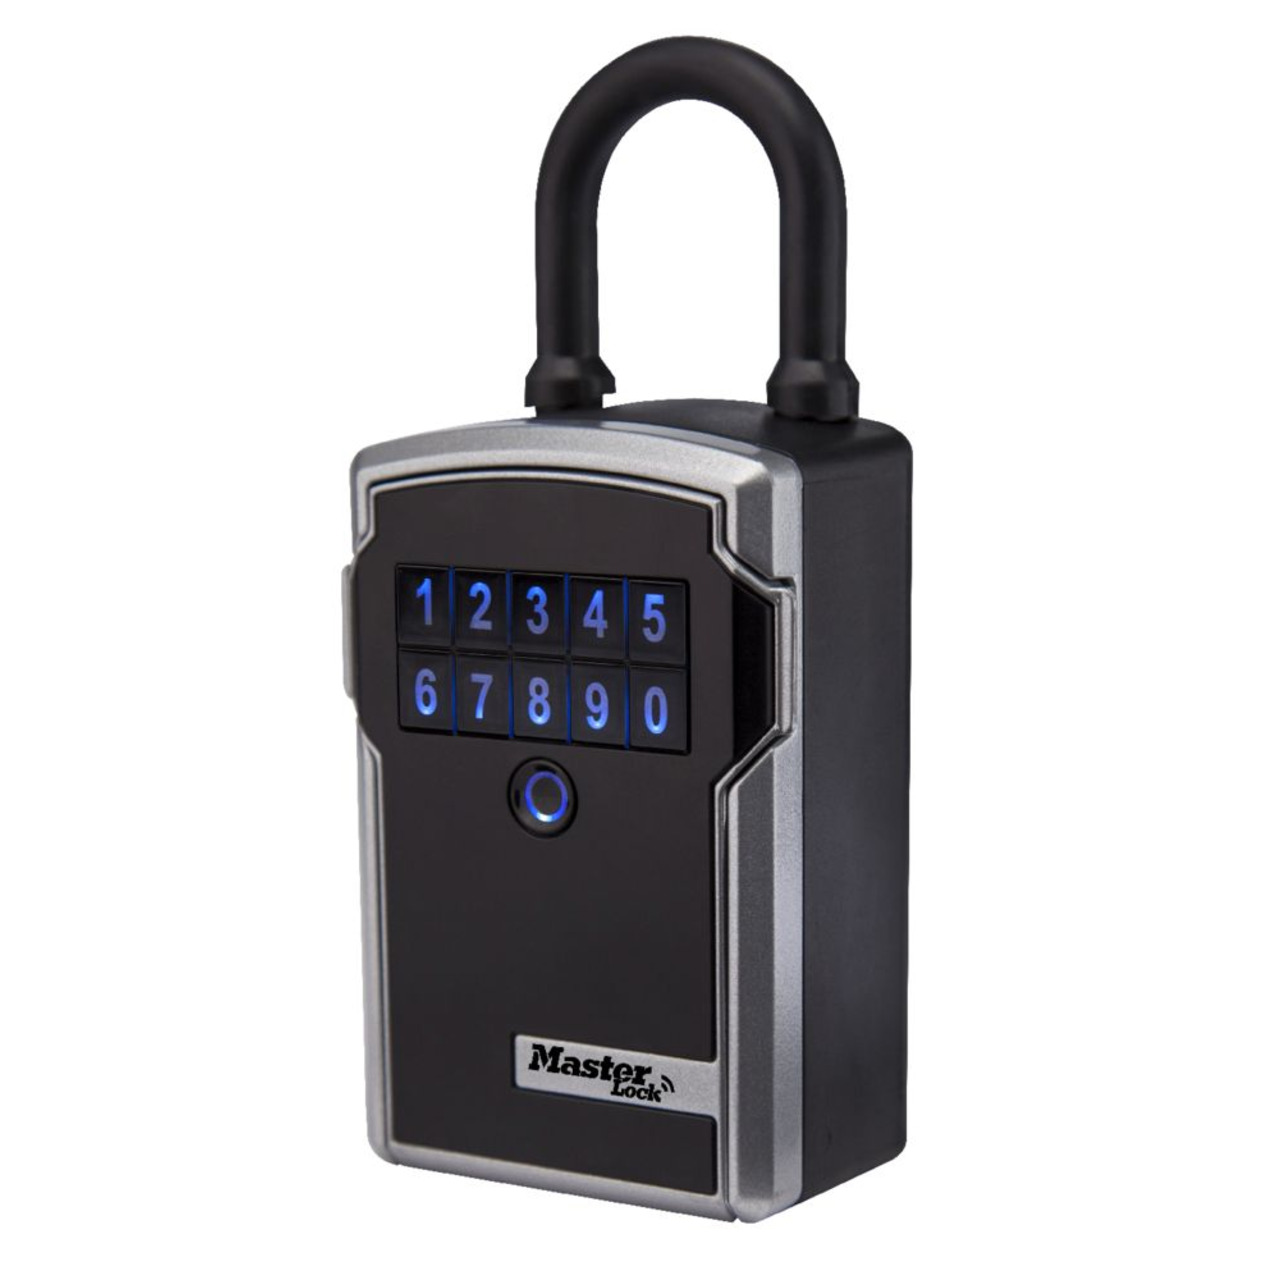 Master Lock Bluetooth-Schlüsselsafe mit Bügel 5440EURD Select Access SMART- Zugriff per Smartphone unter Haustechnik